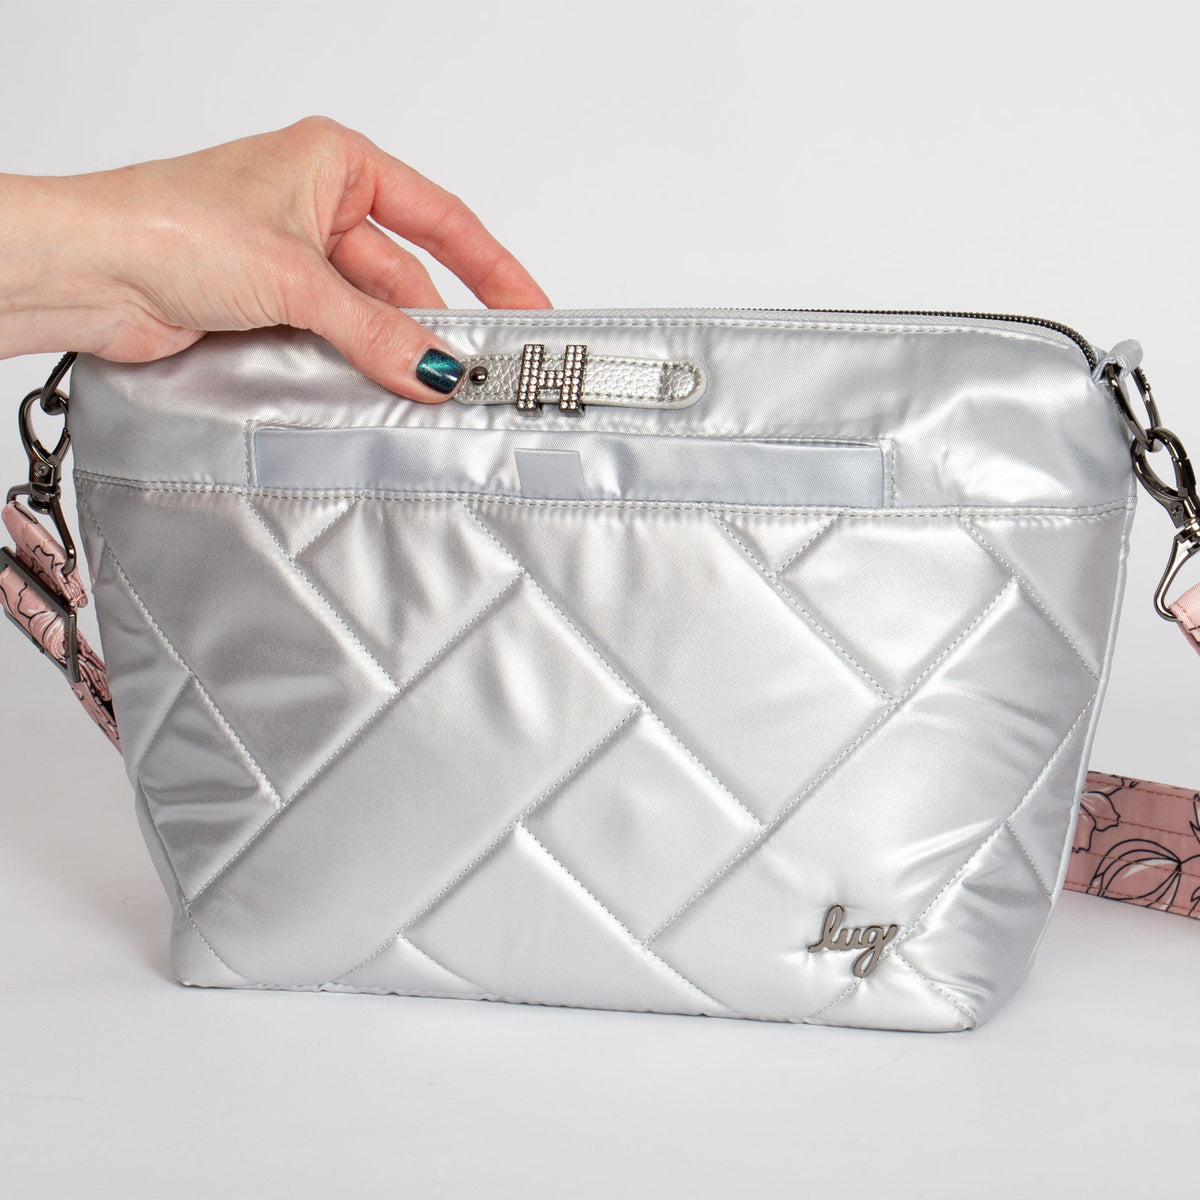 Charms & Pendants - That Crazy Handbag Lady